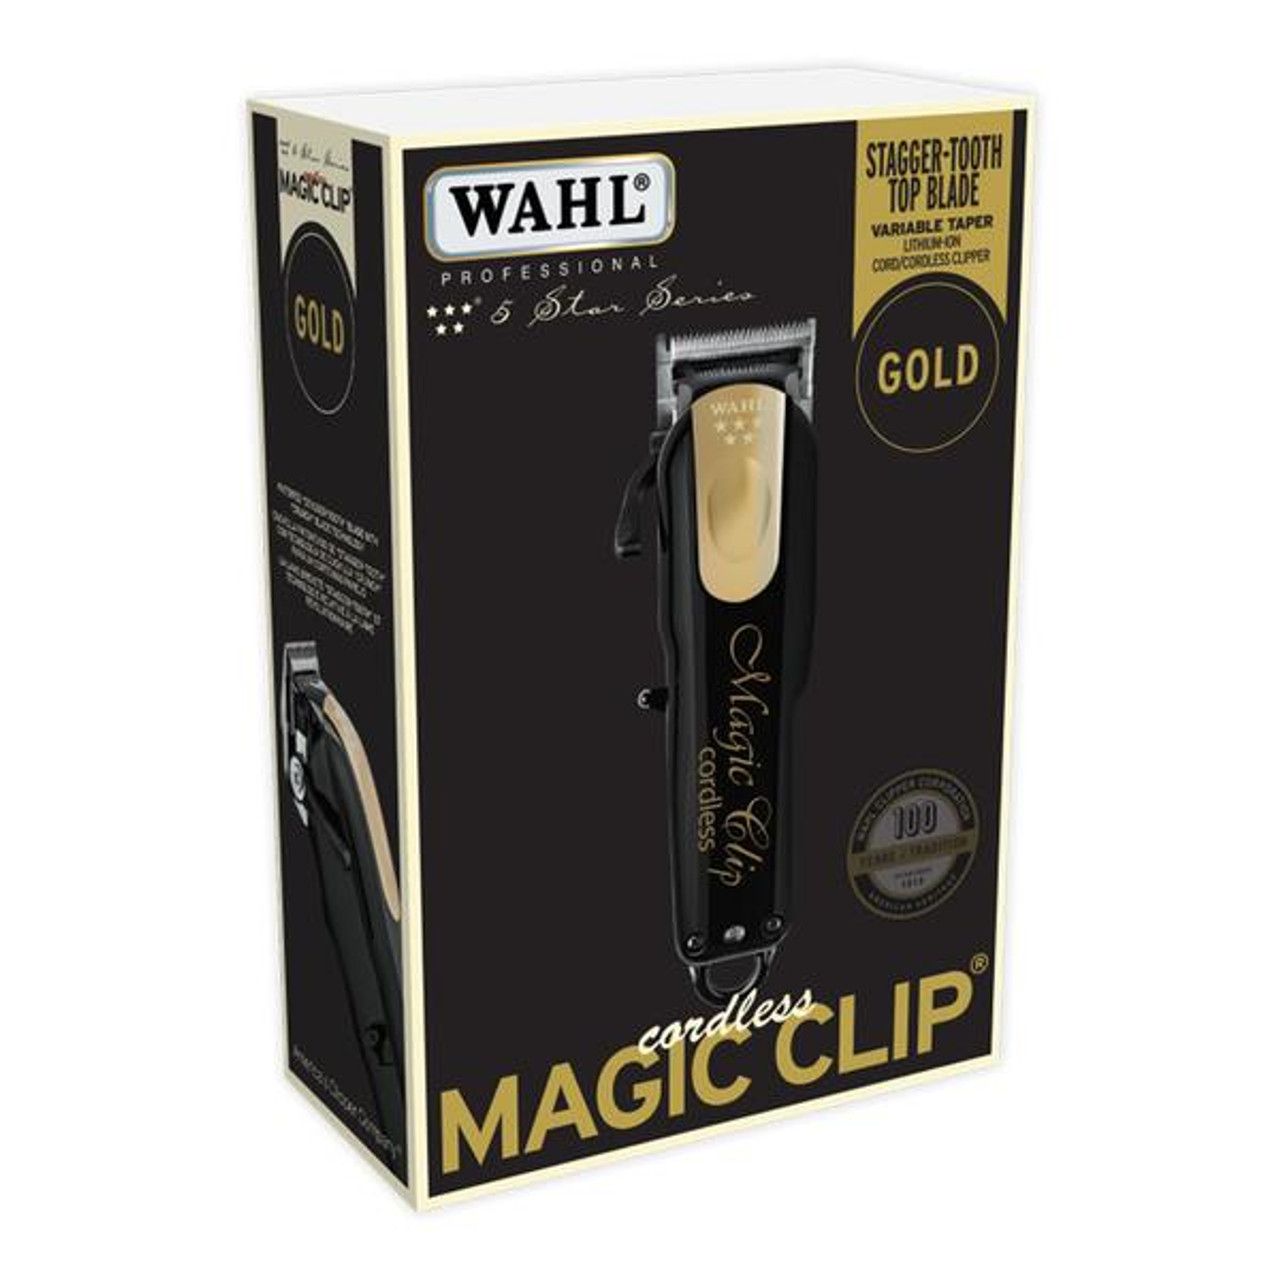 wahl magic clip gold cordless